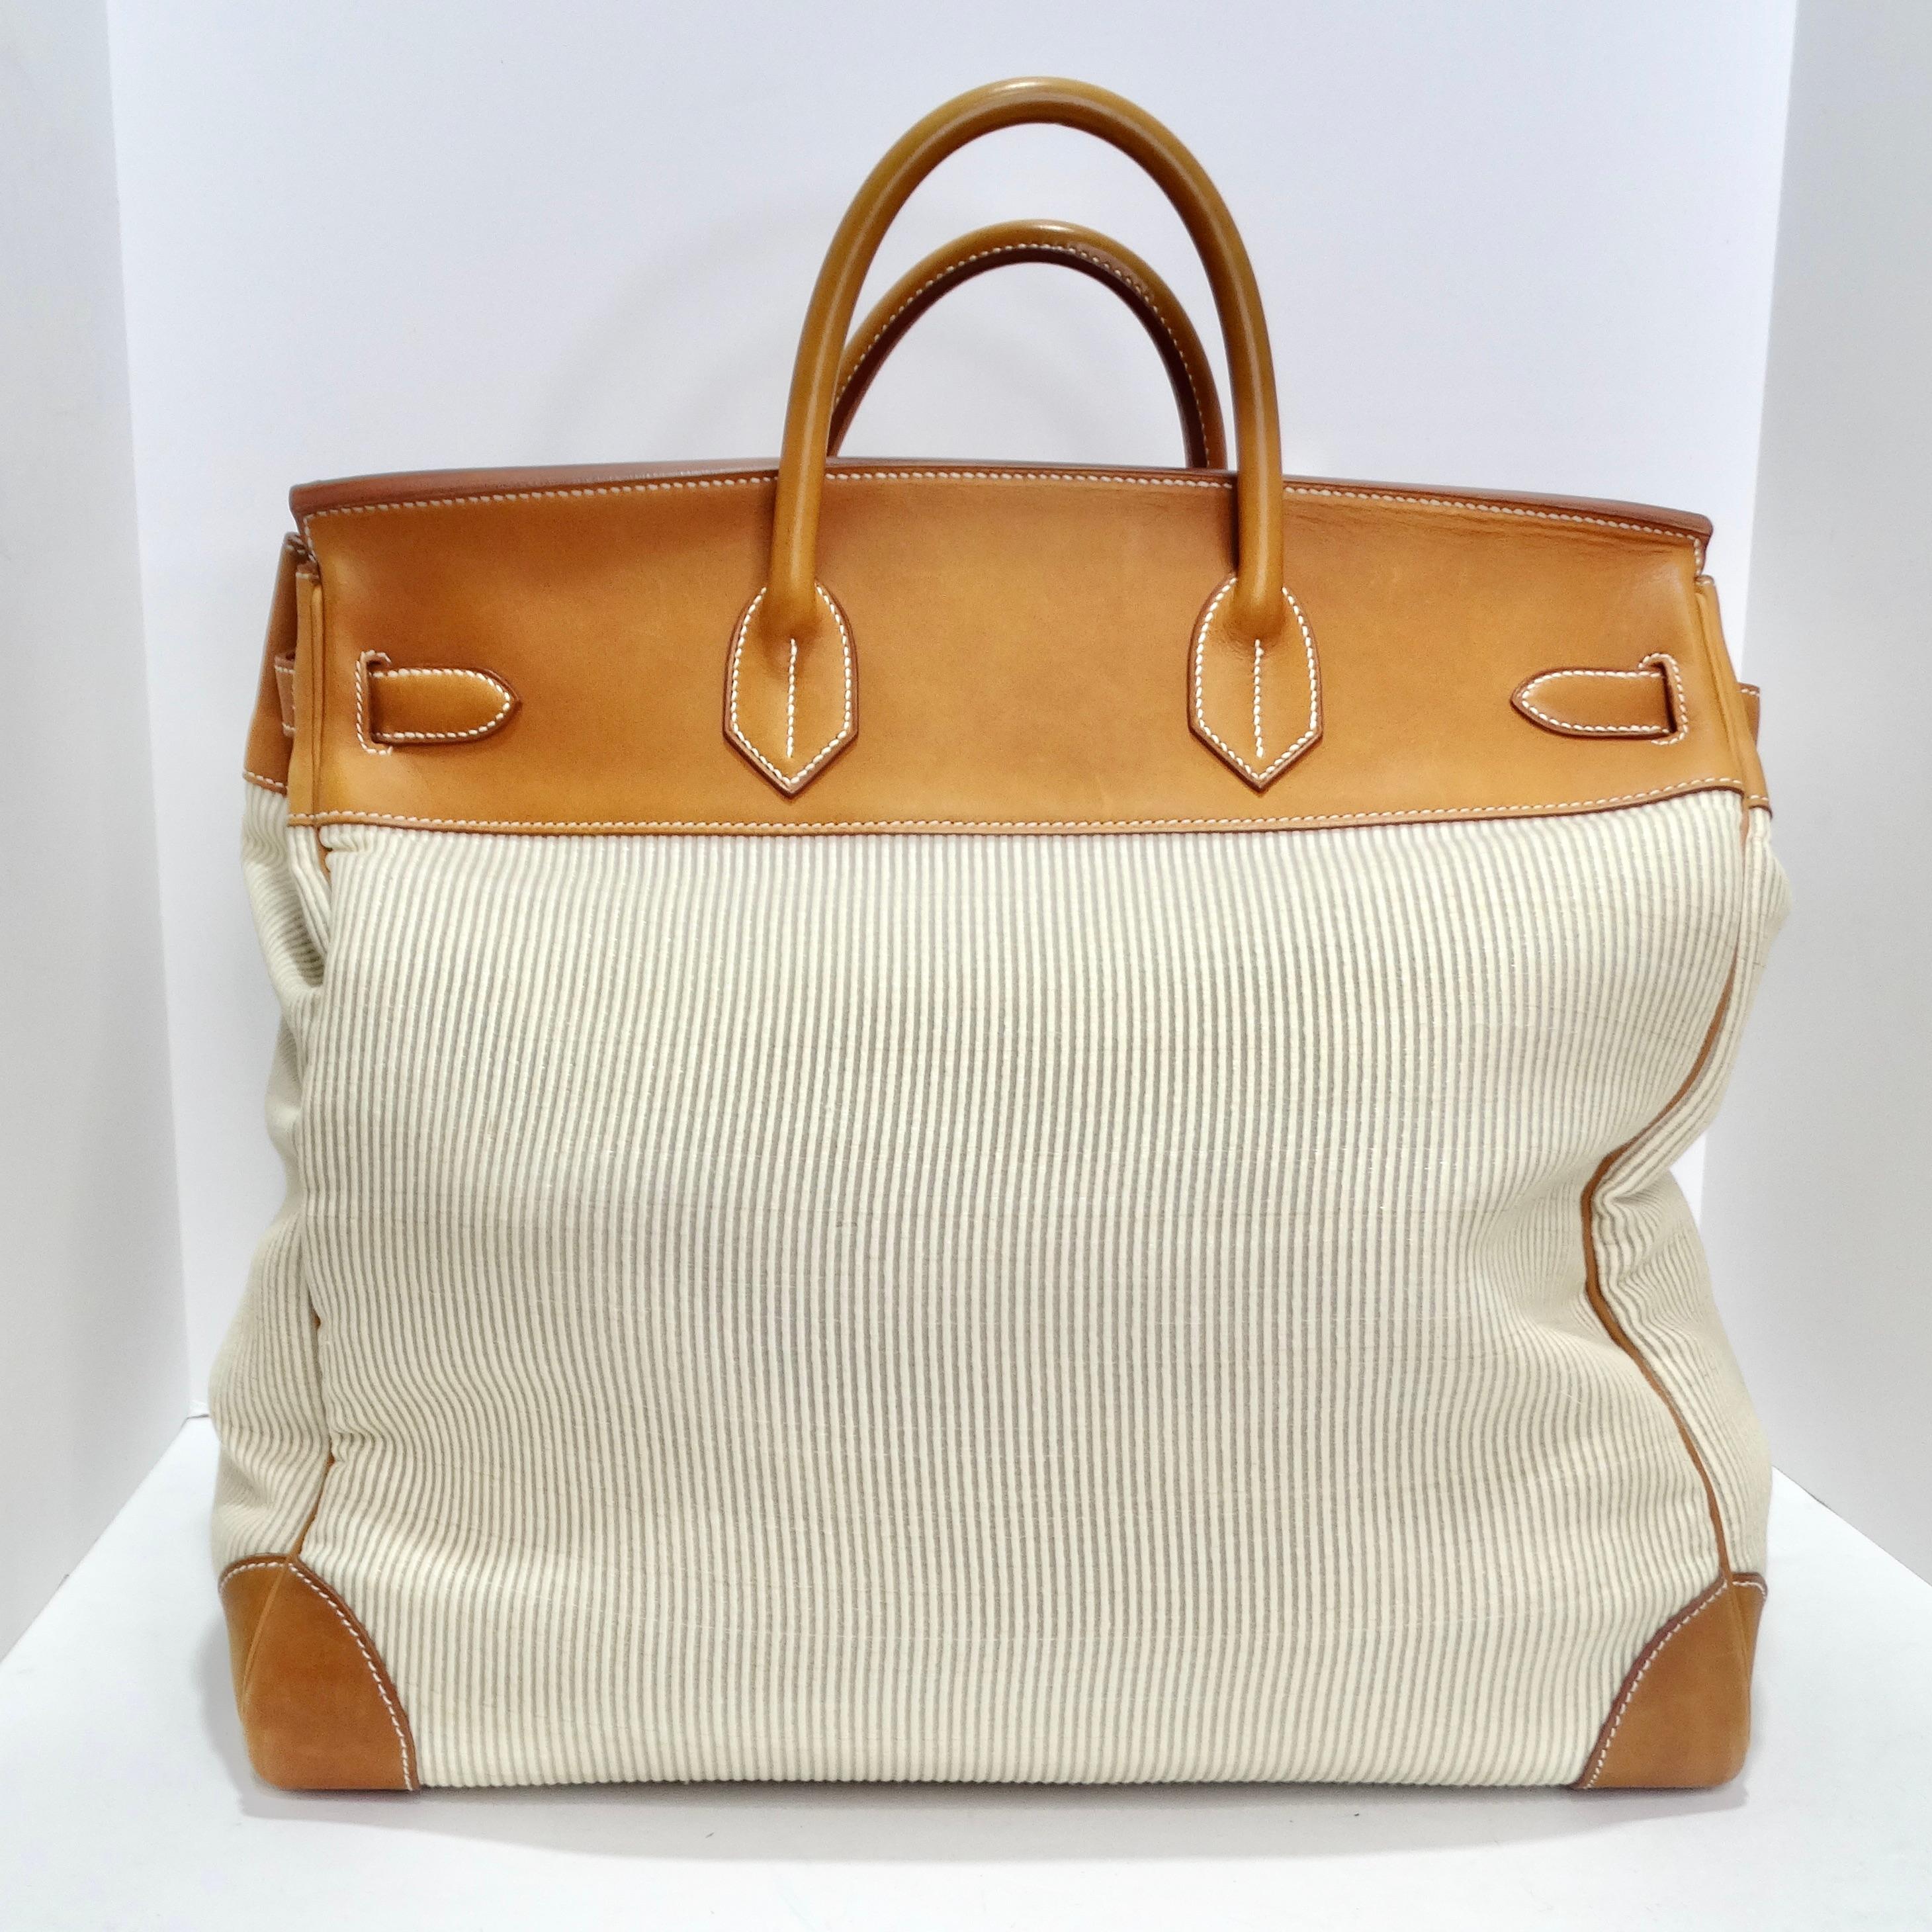 Hermes Birkin Bag 50cm in Barenia Crinoline For Sale 4